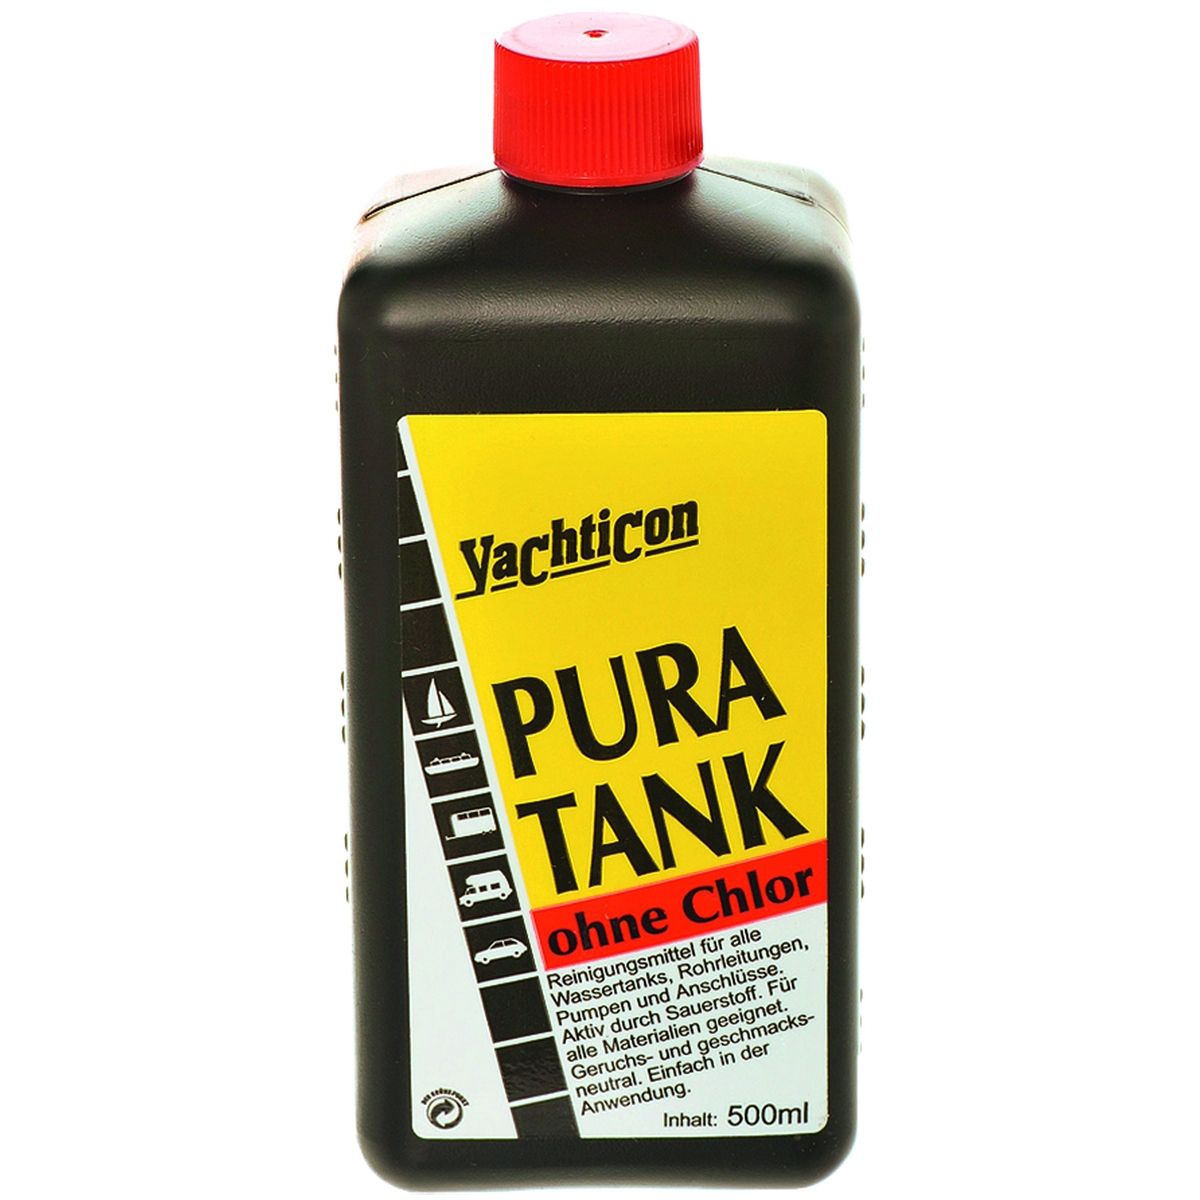 Yachticon Pura Tank Tankreiniger